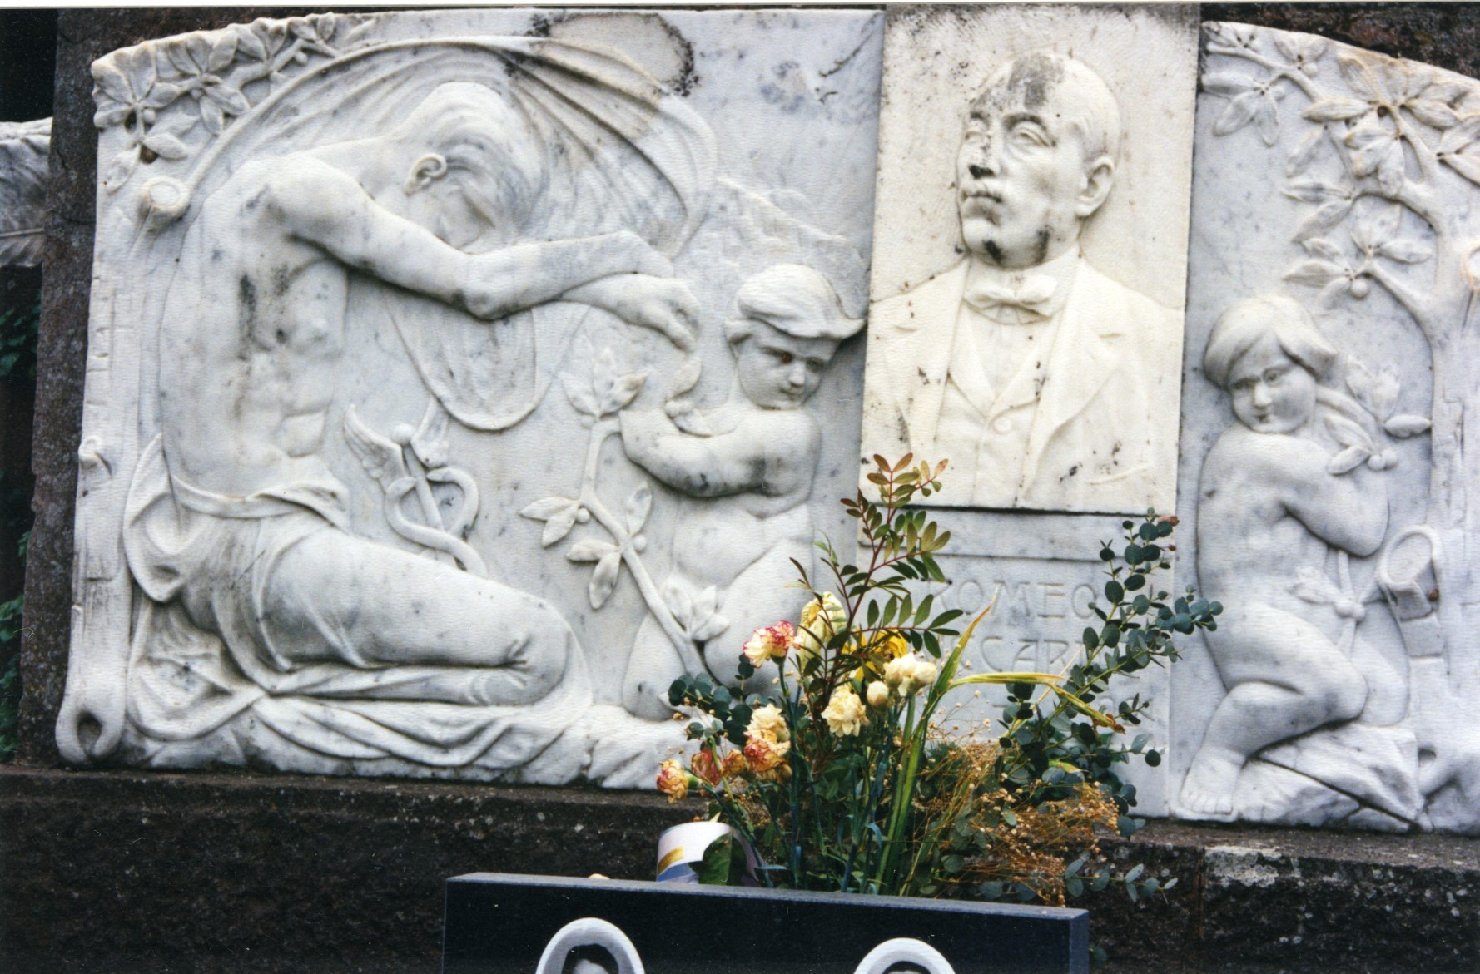 figura maschile inginocchiata/ putti (monumento funebre) di Usai Antonio (primo quarto sec. XX)